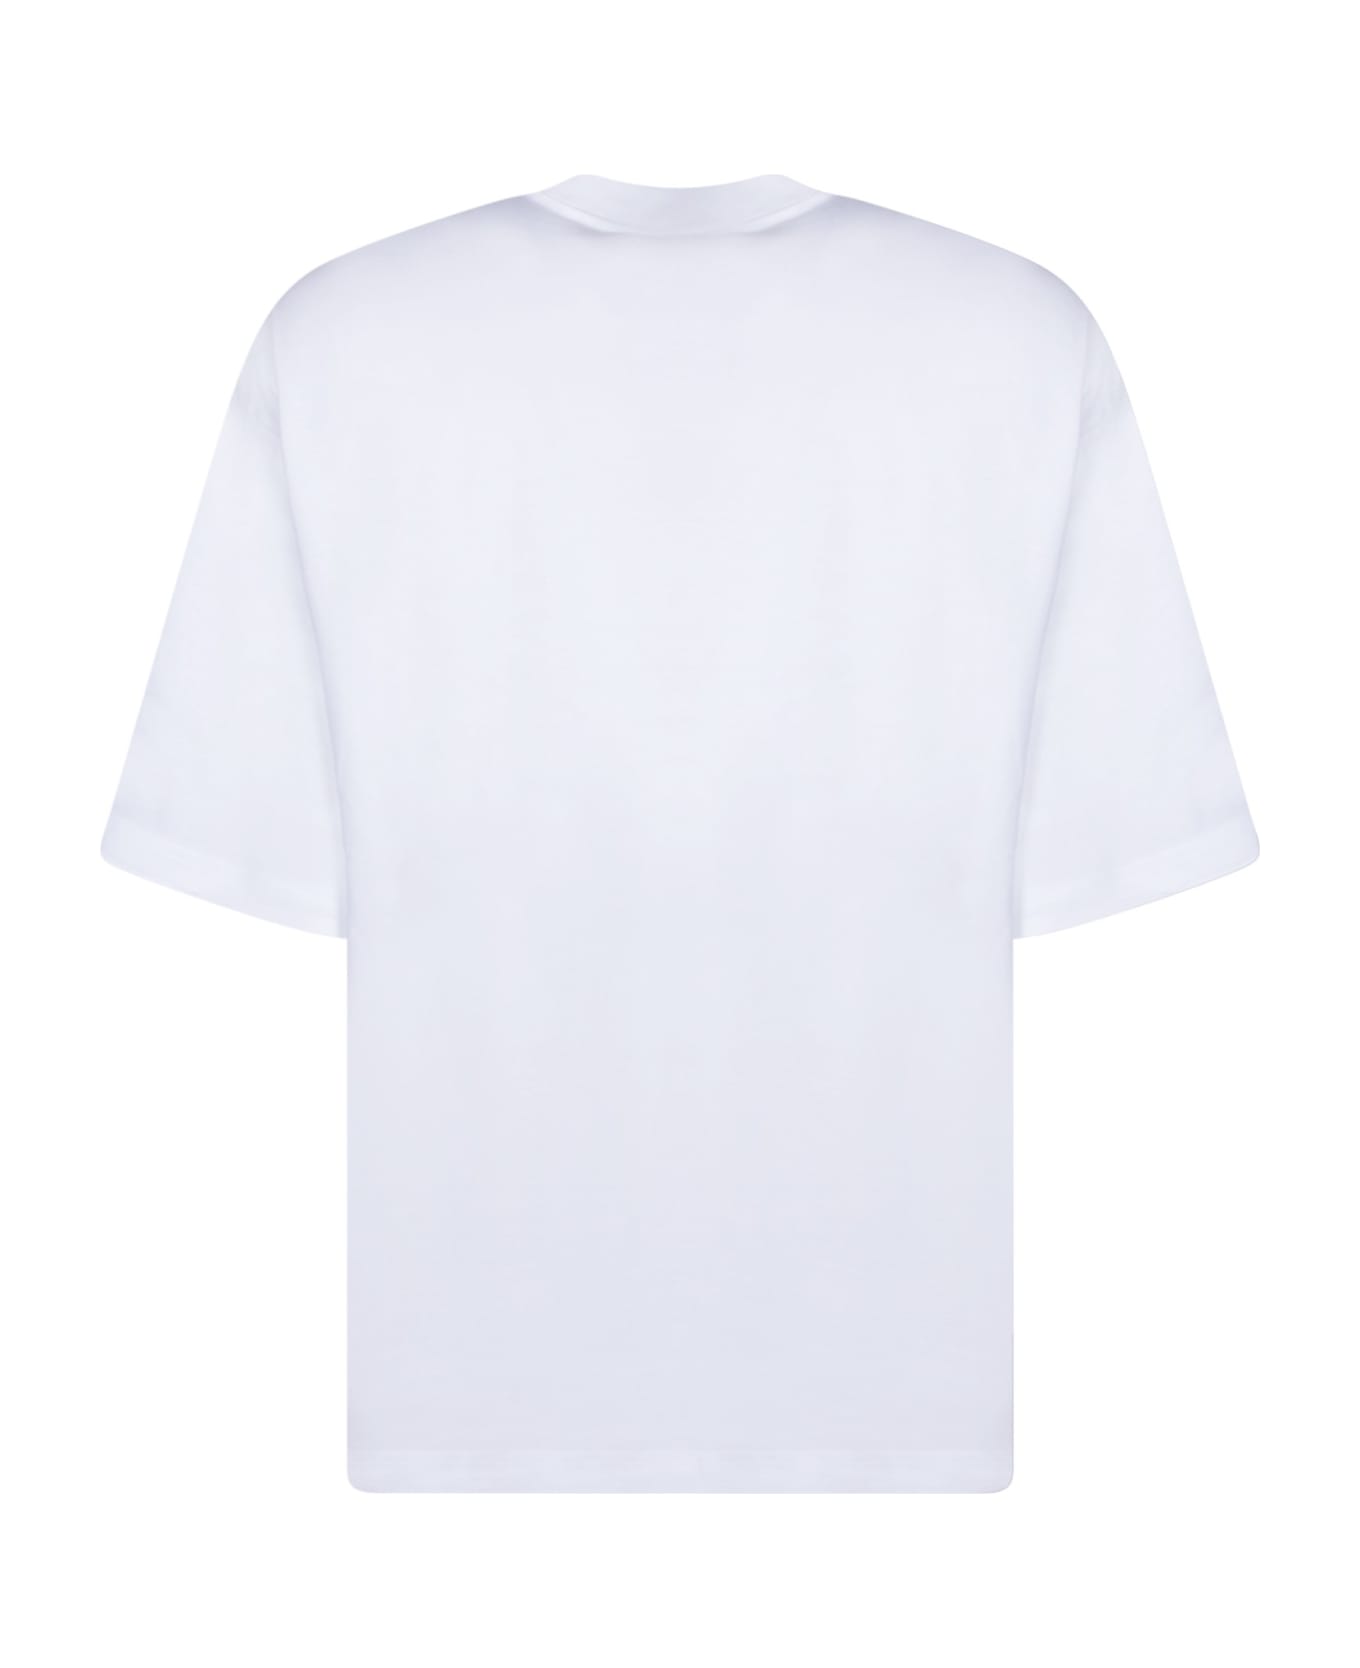 Lanvin Curblance White T-shirt - White